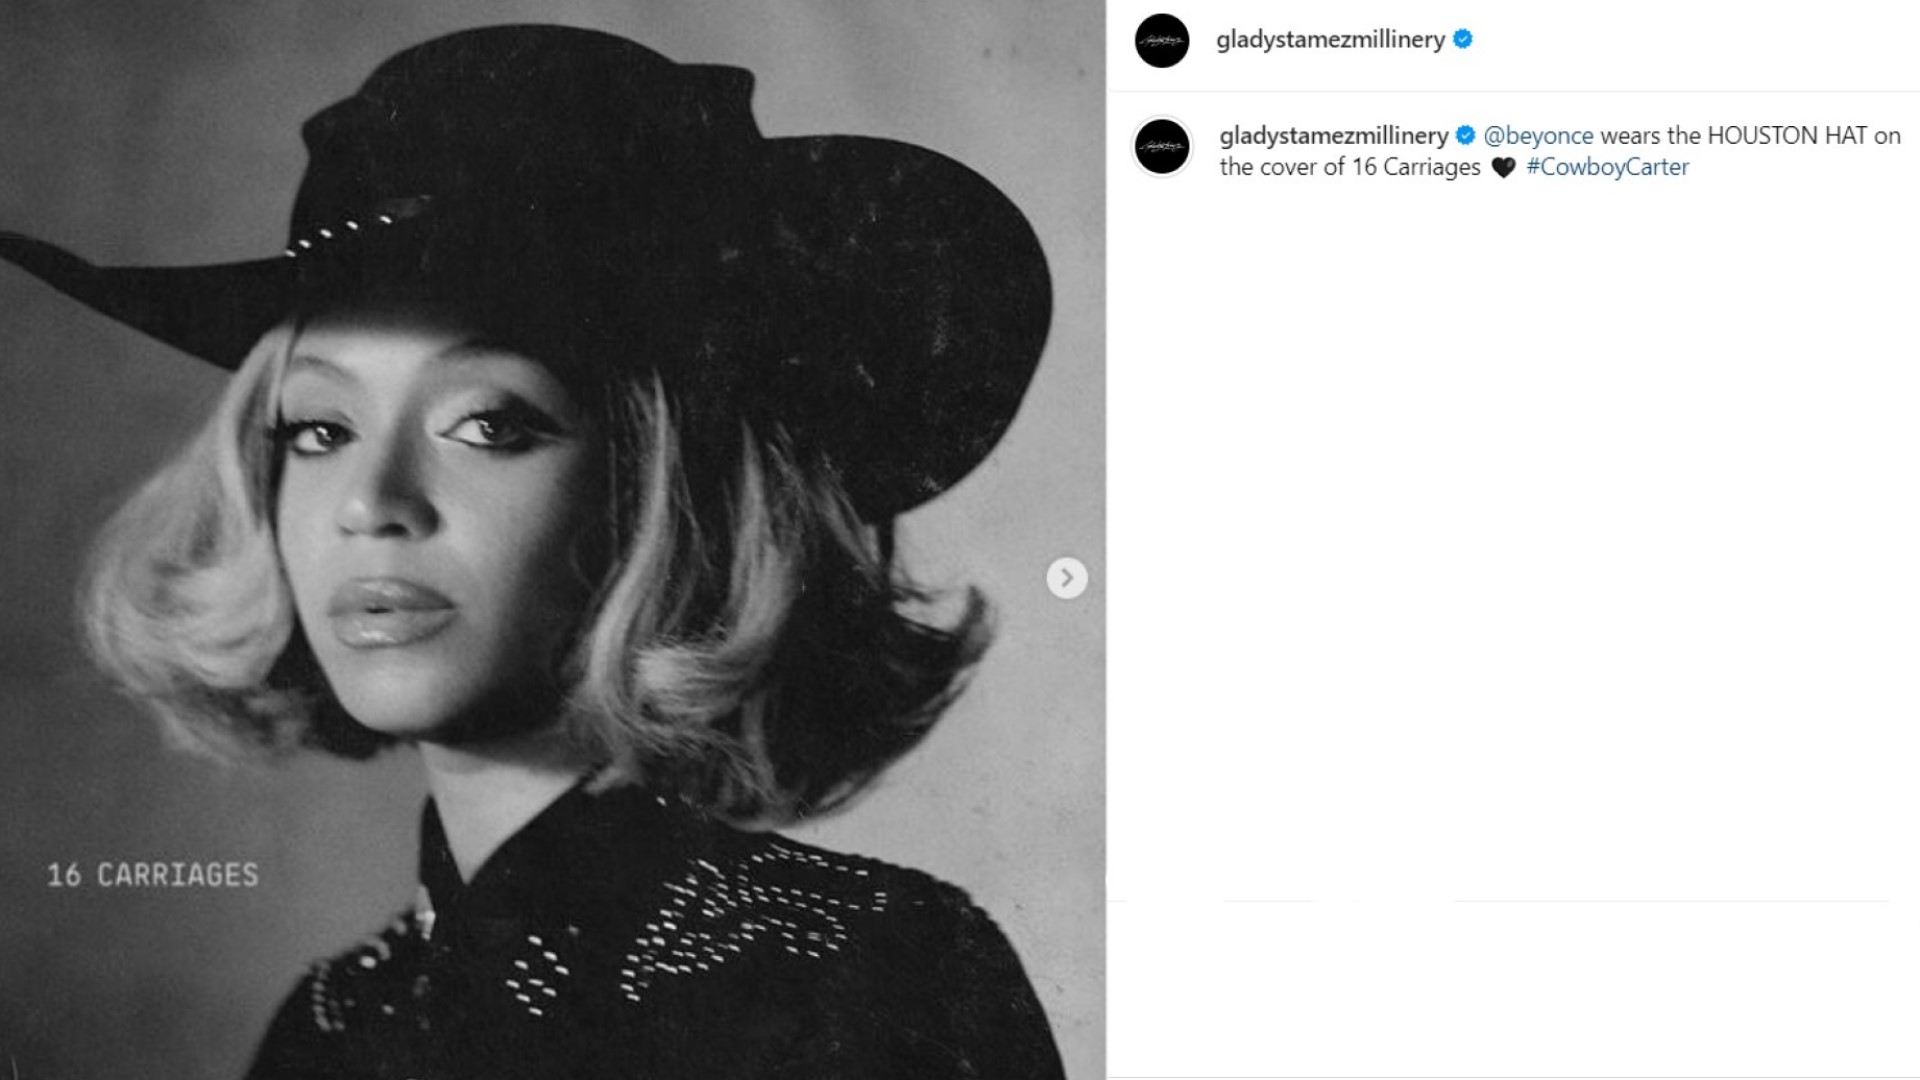 Beyoncé and Maluma also wear Gladyz Tamez hats